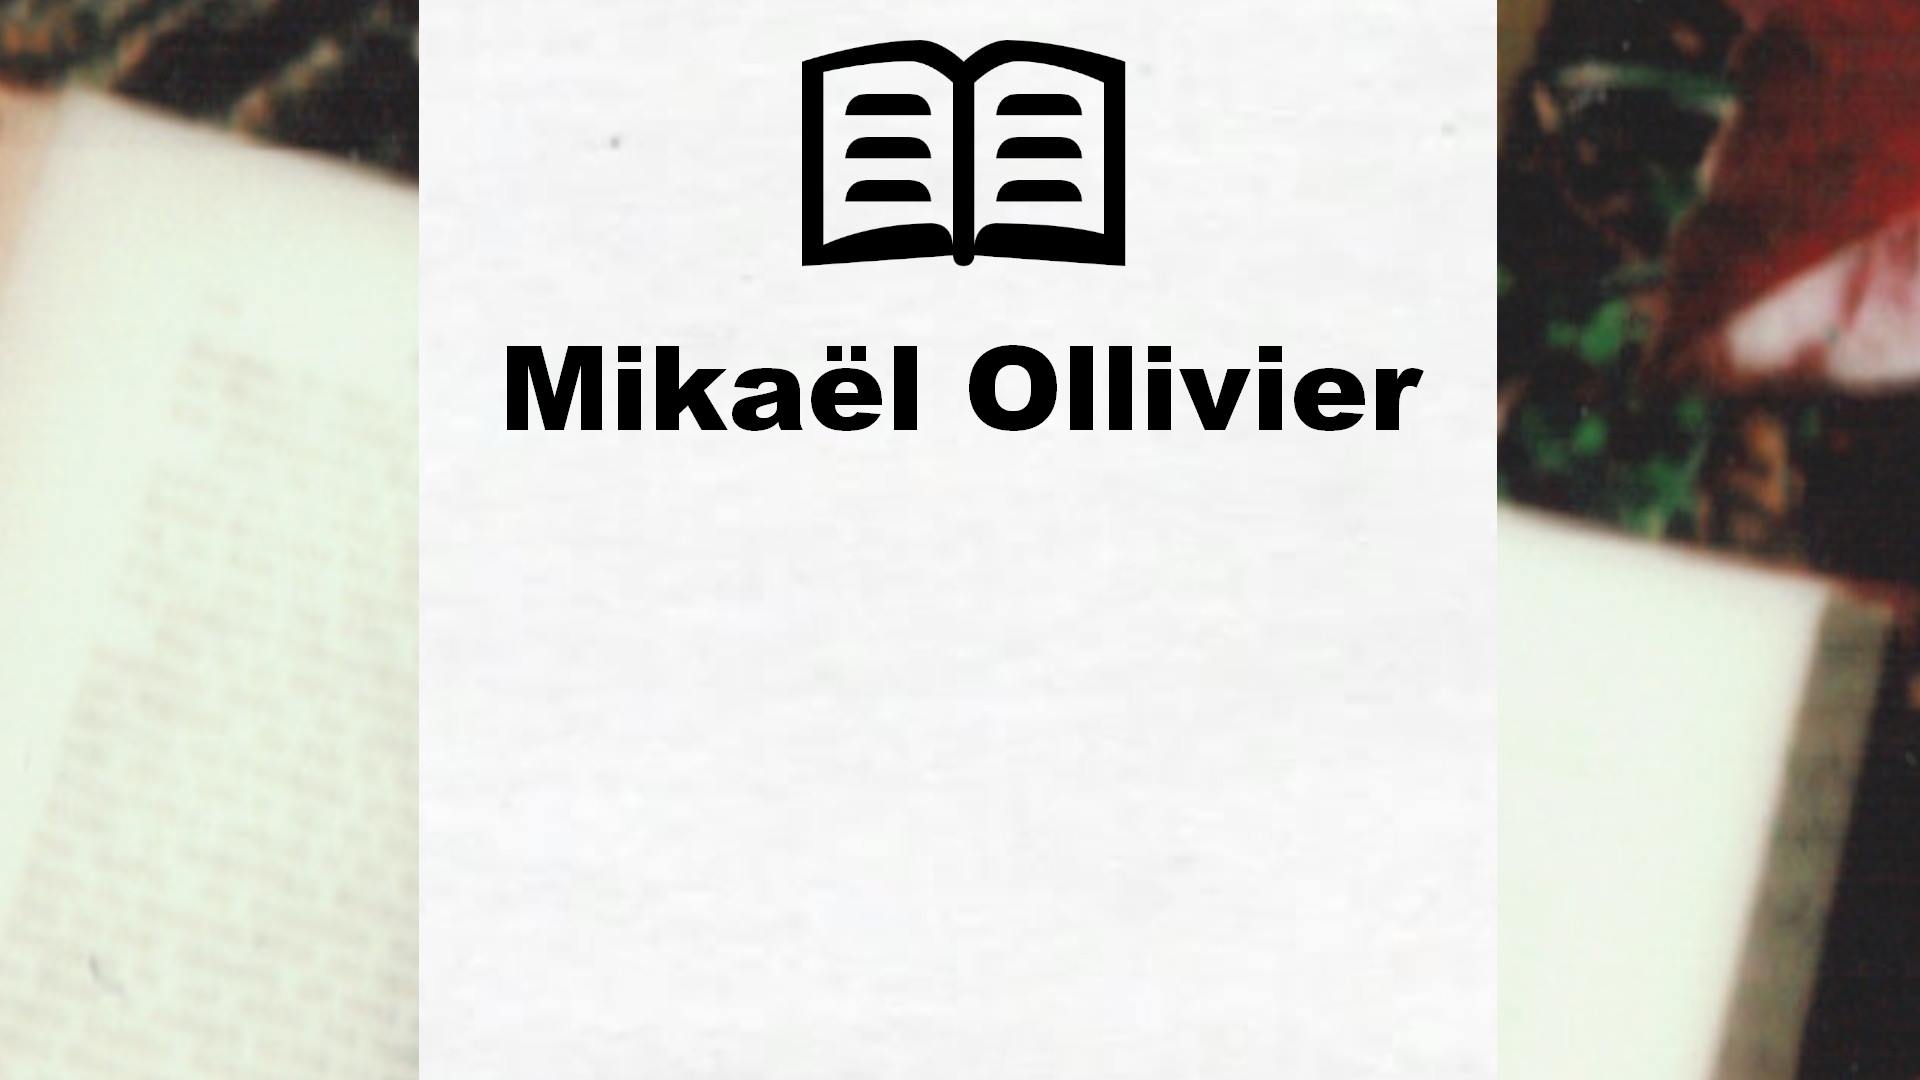 Livres de Mikaël Ollivier